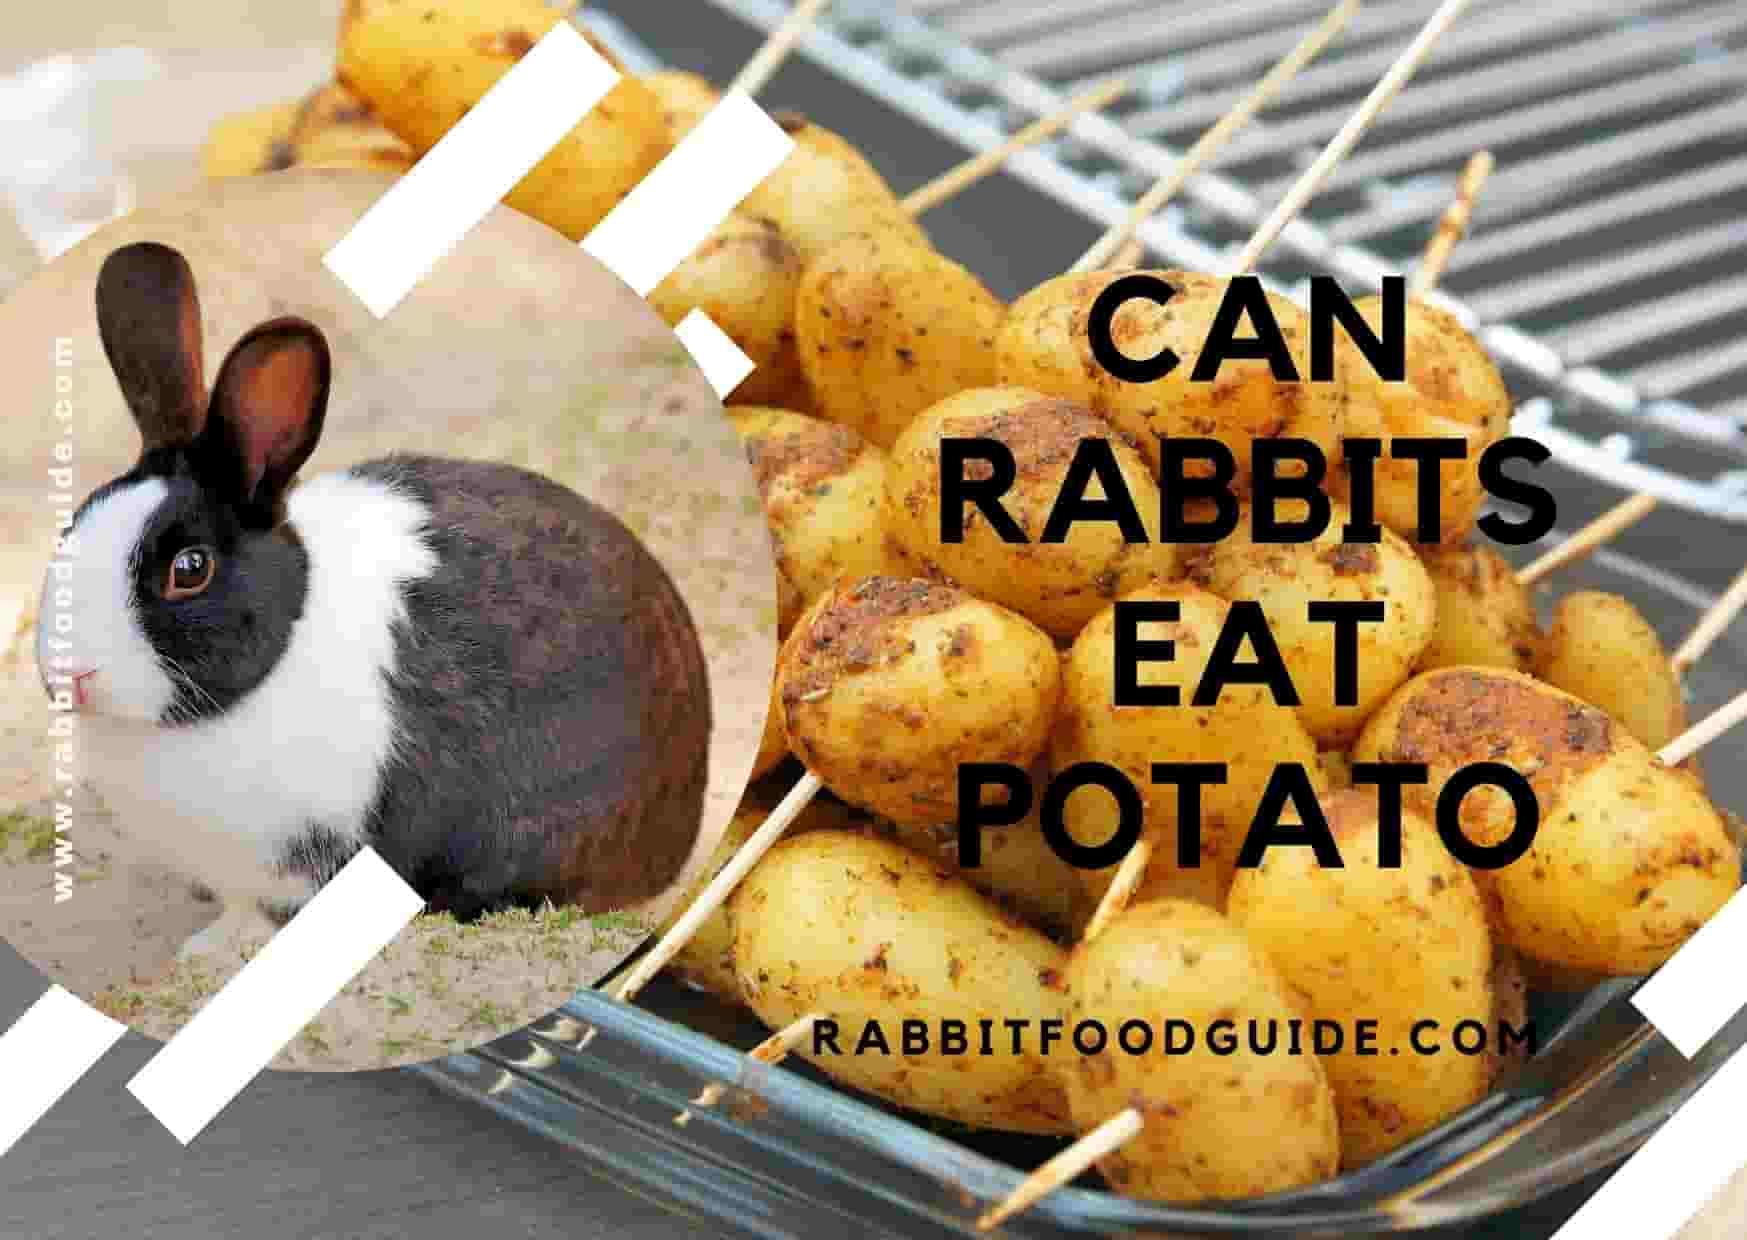 Rabbits eat potatoes